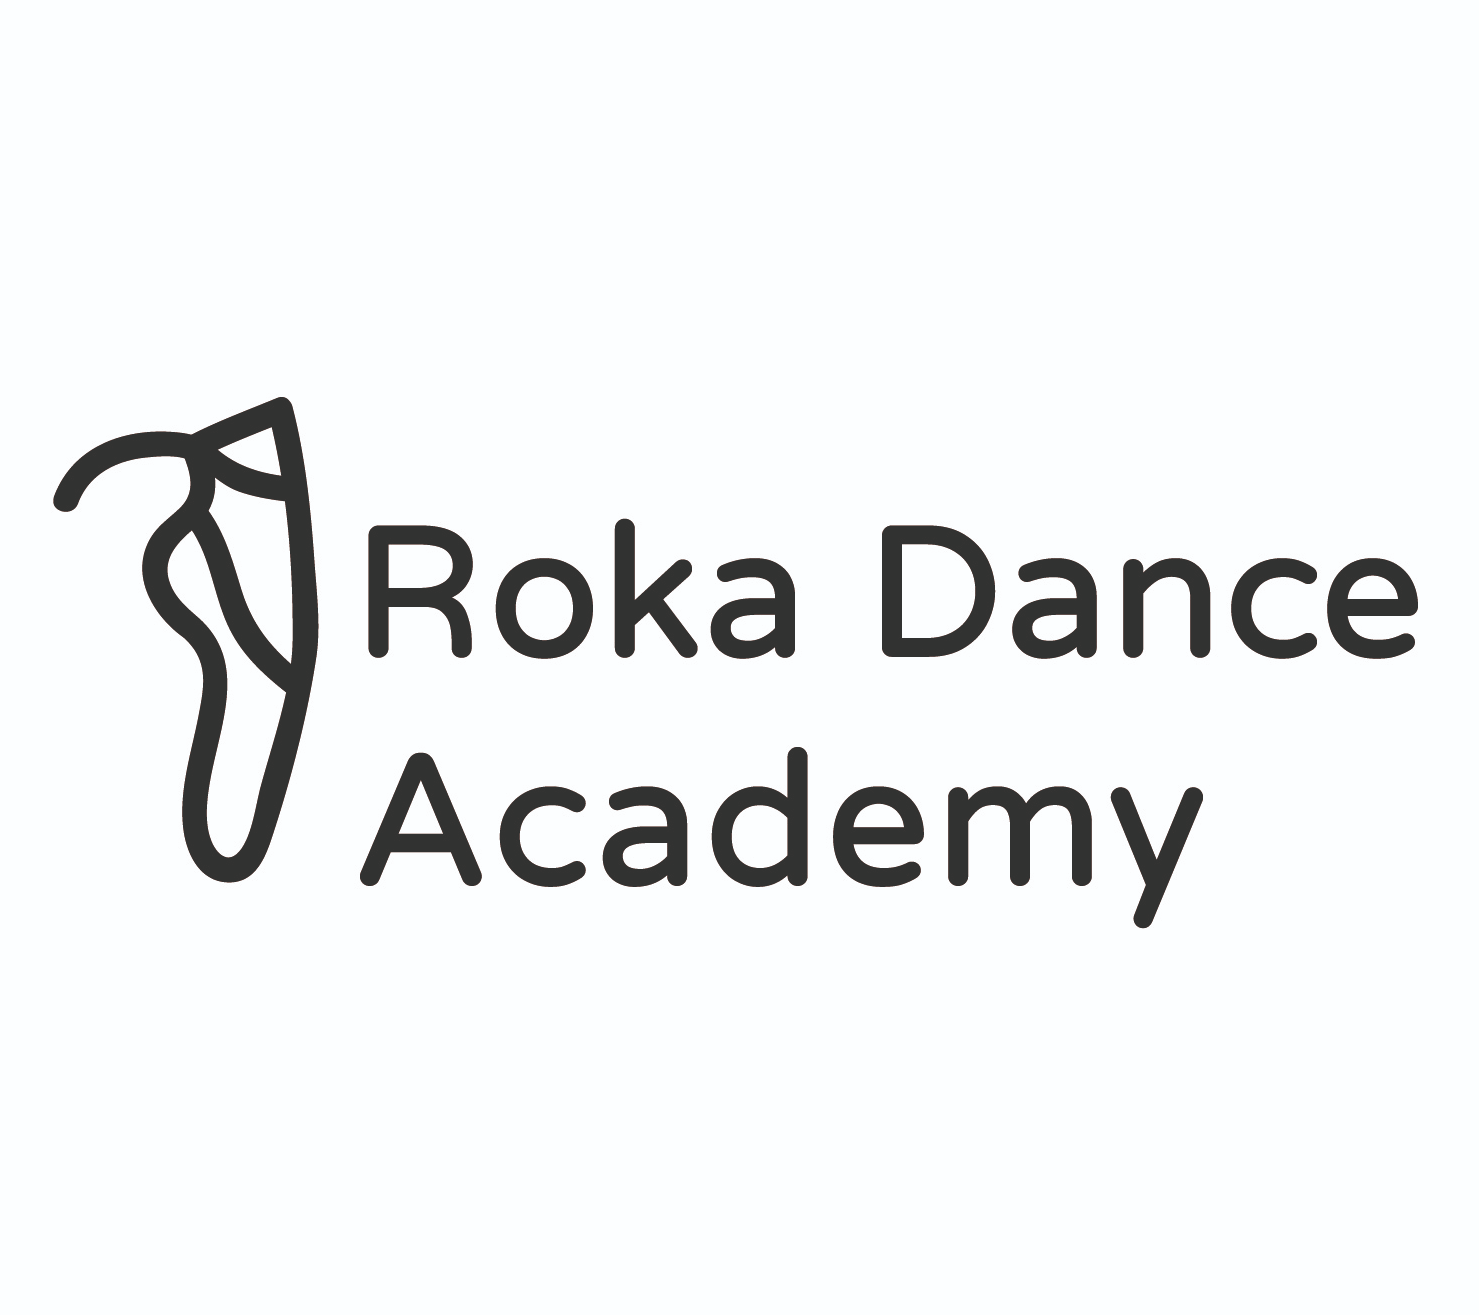 ROKA DANCE ACADEMY logo